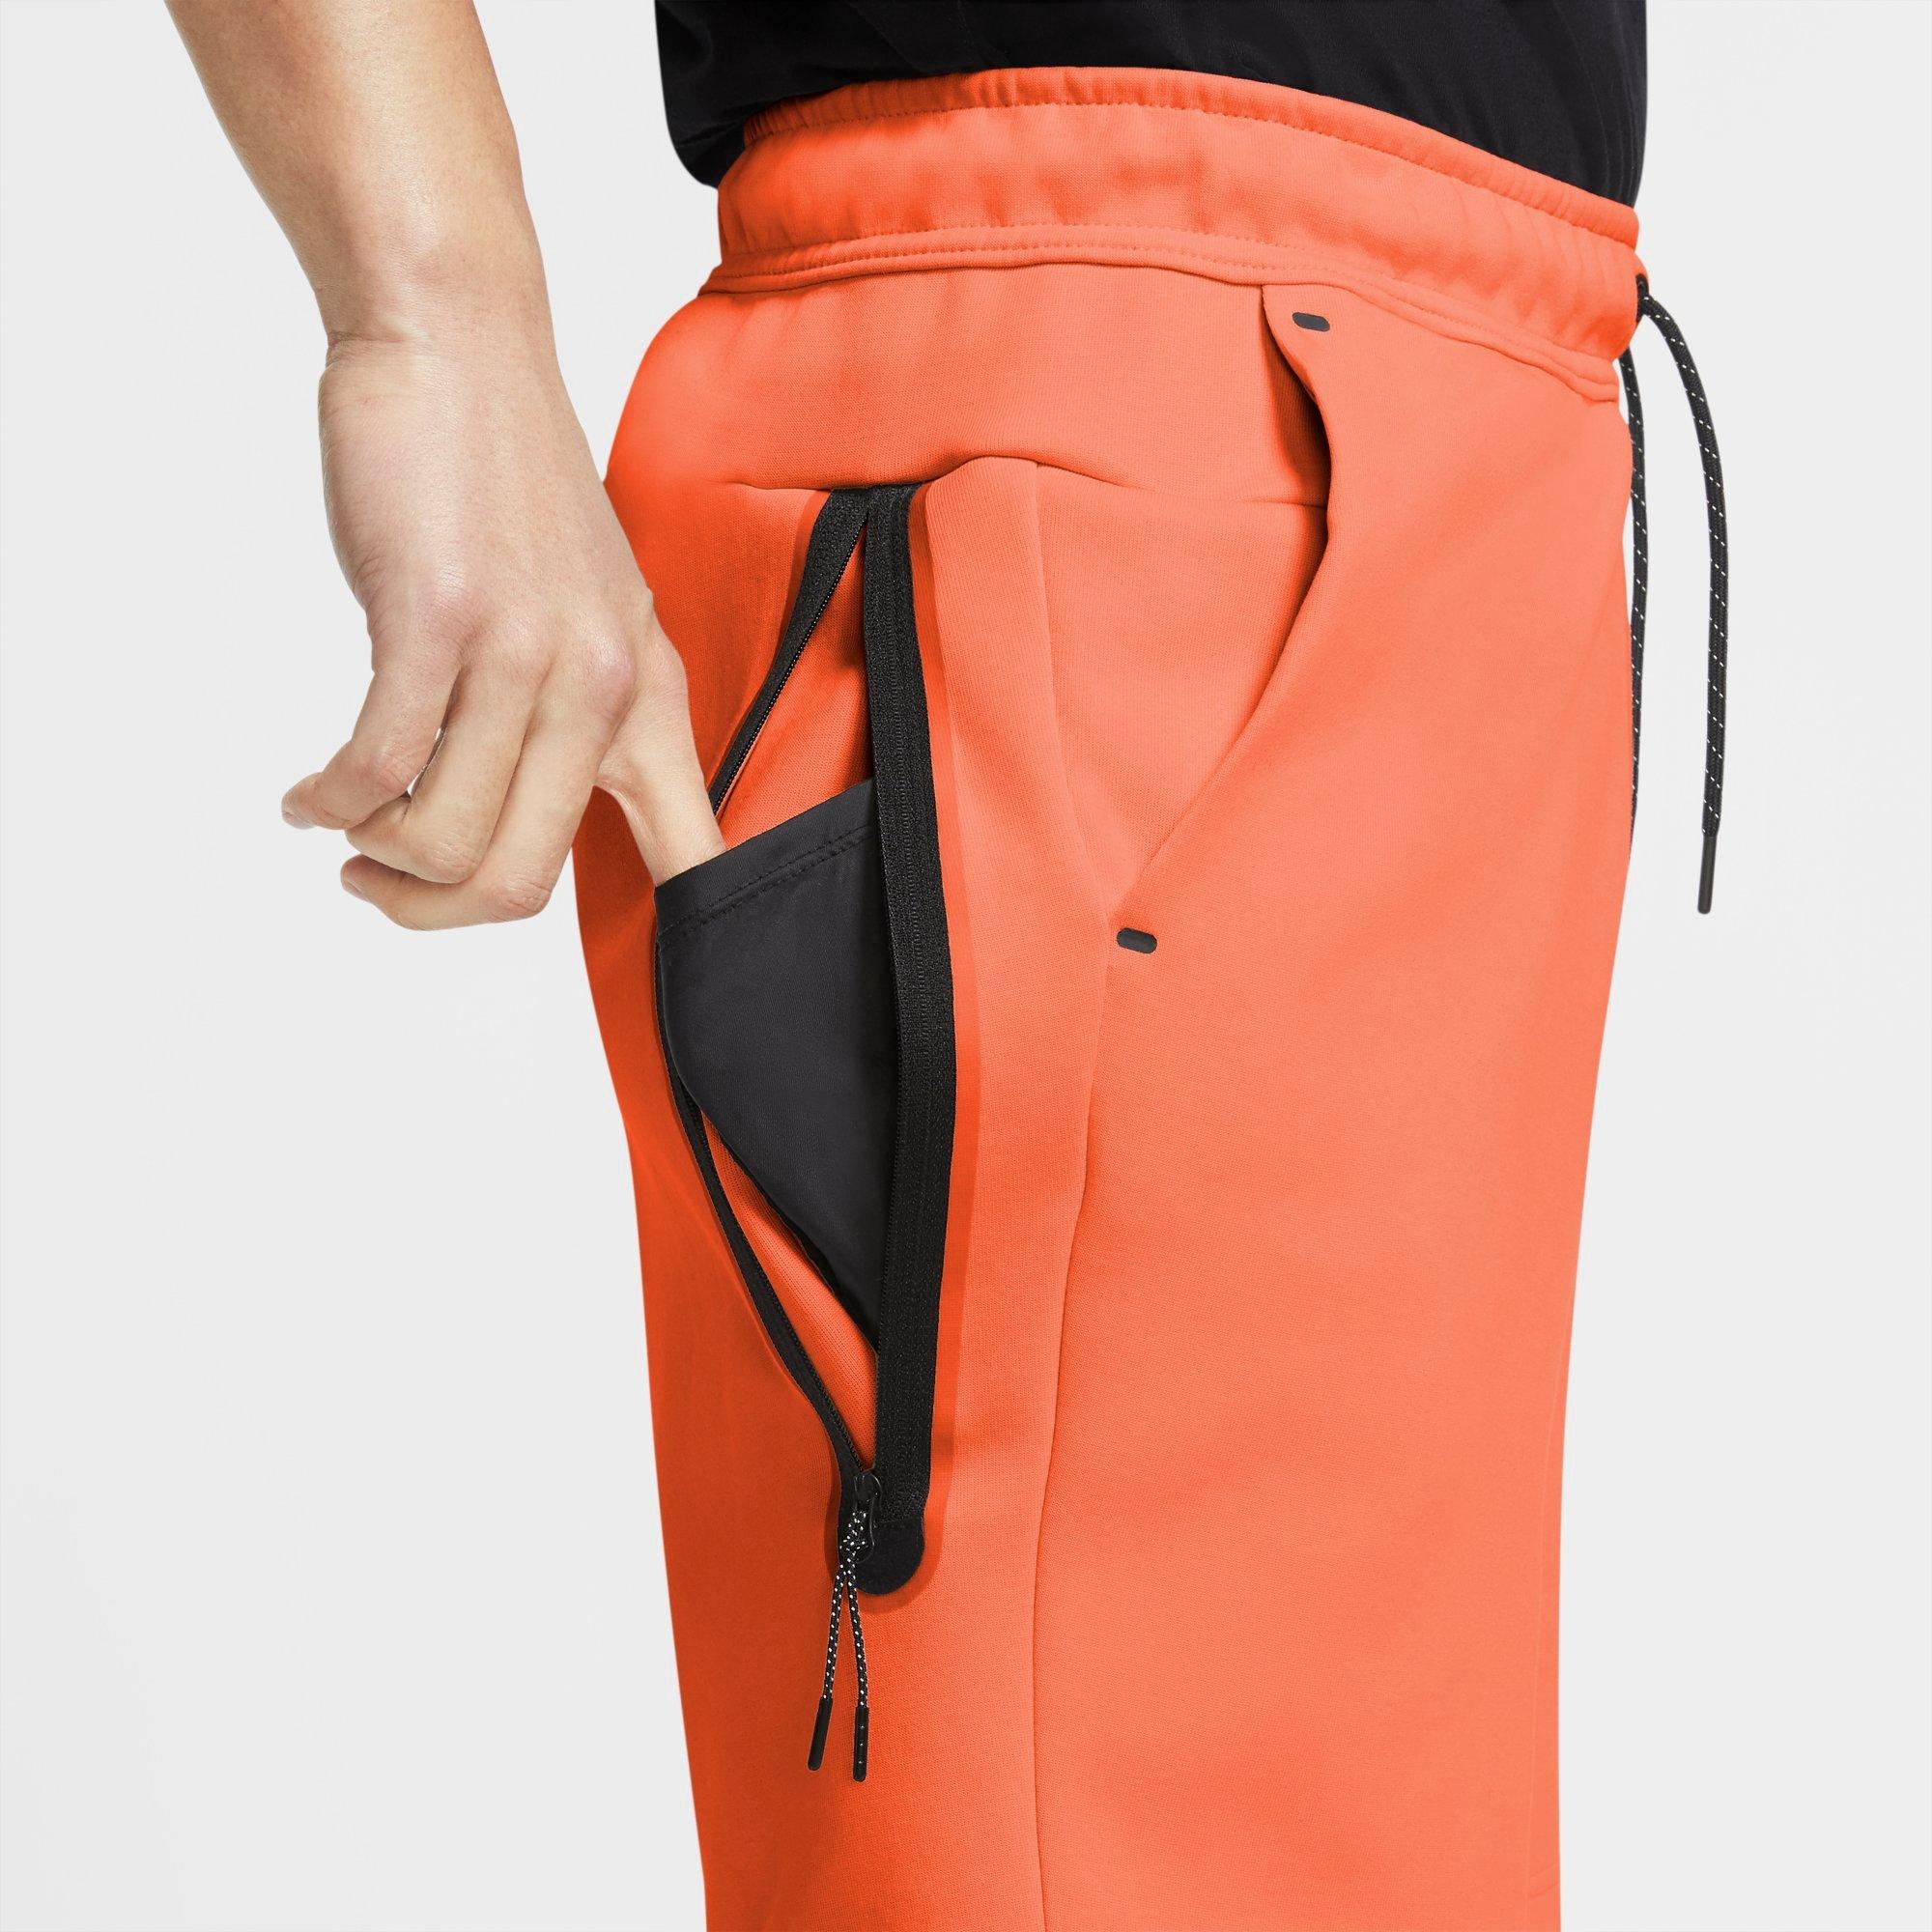 orange nike tech fleece pants